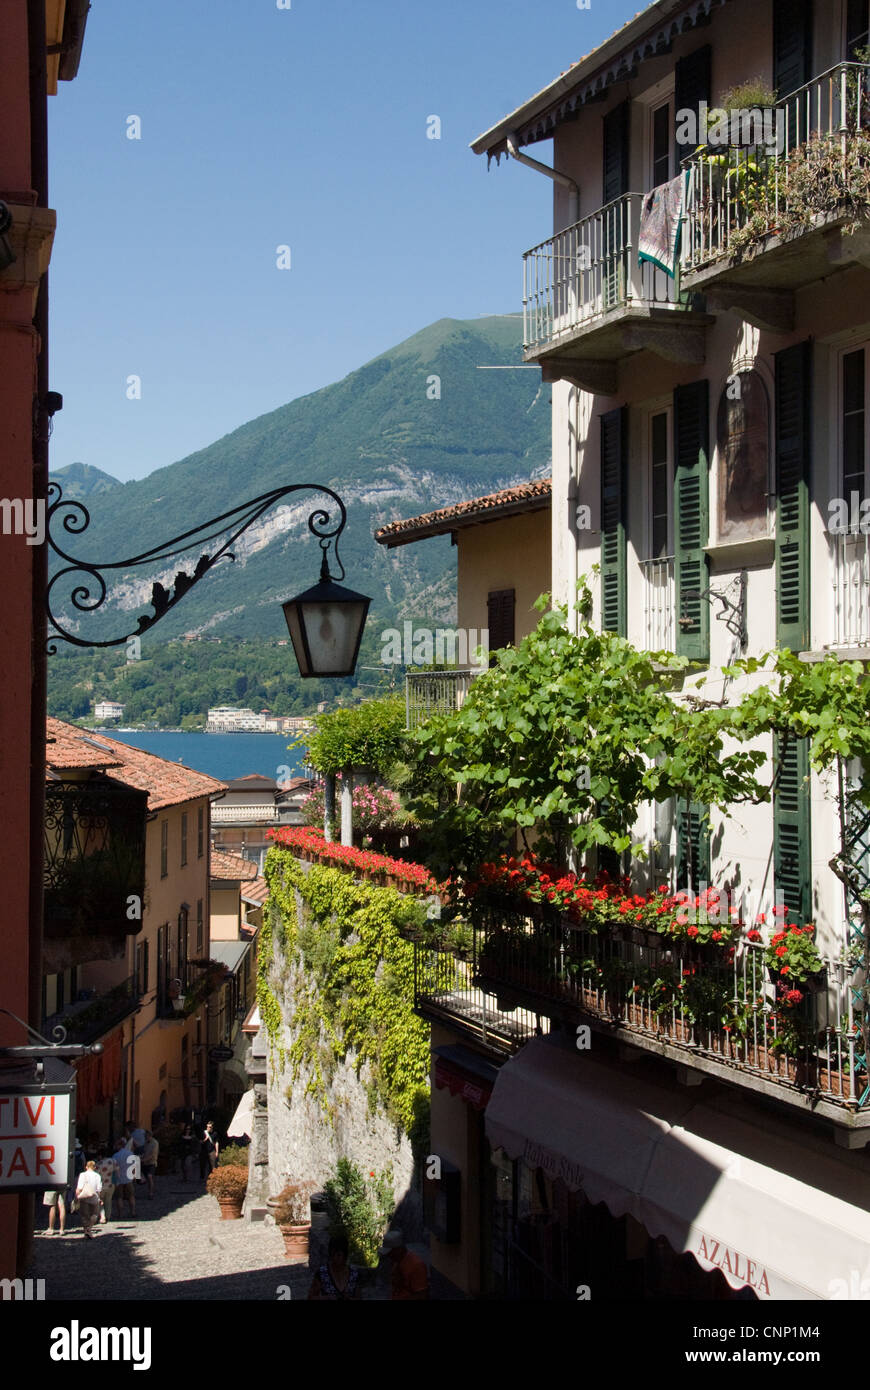 Alleyway in Varenna, Lake Como, Italy. Stock Photo